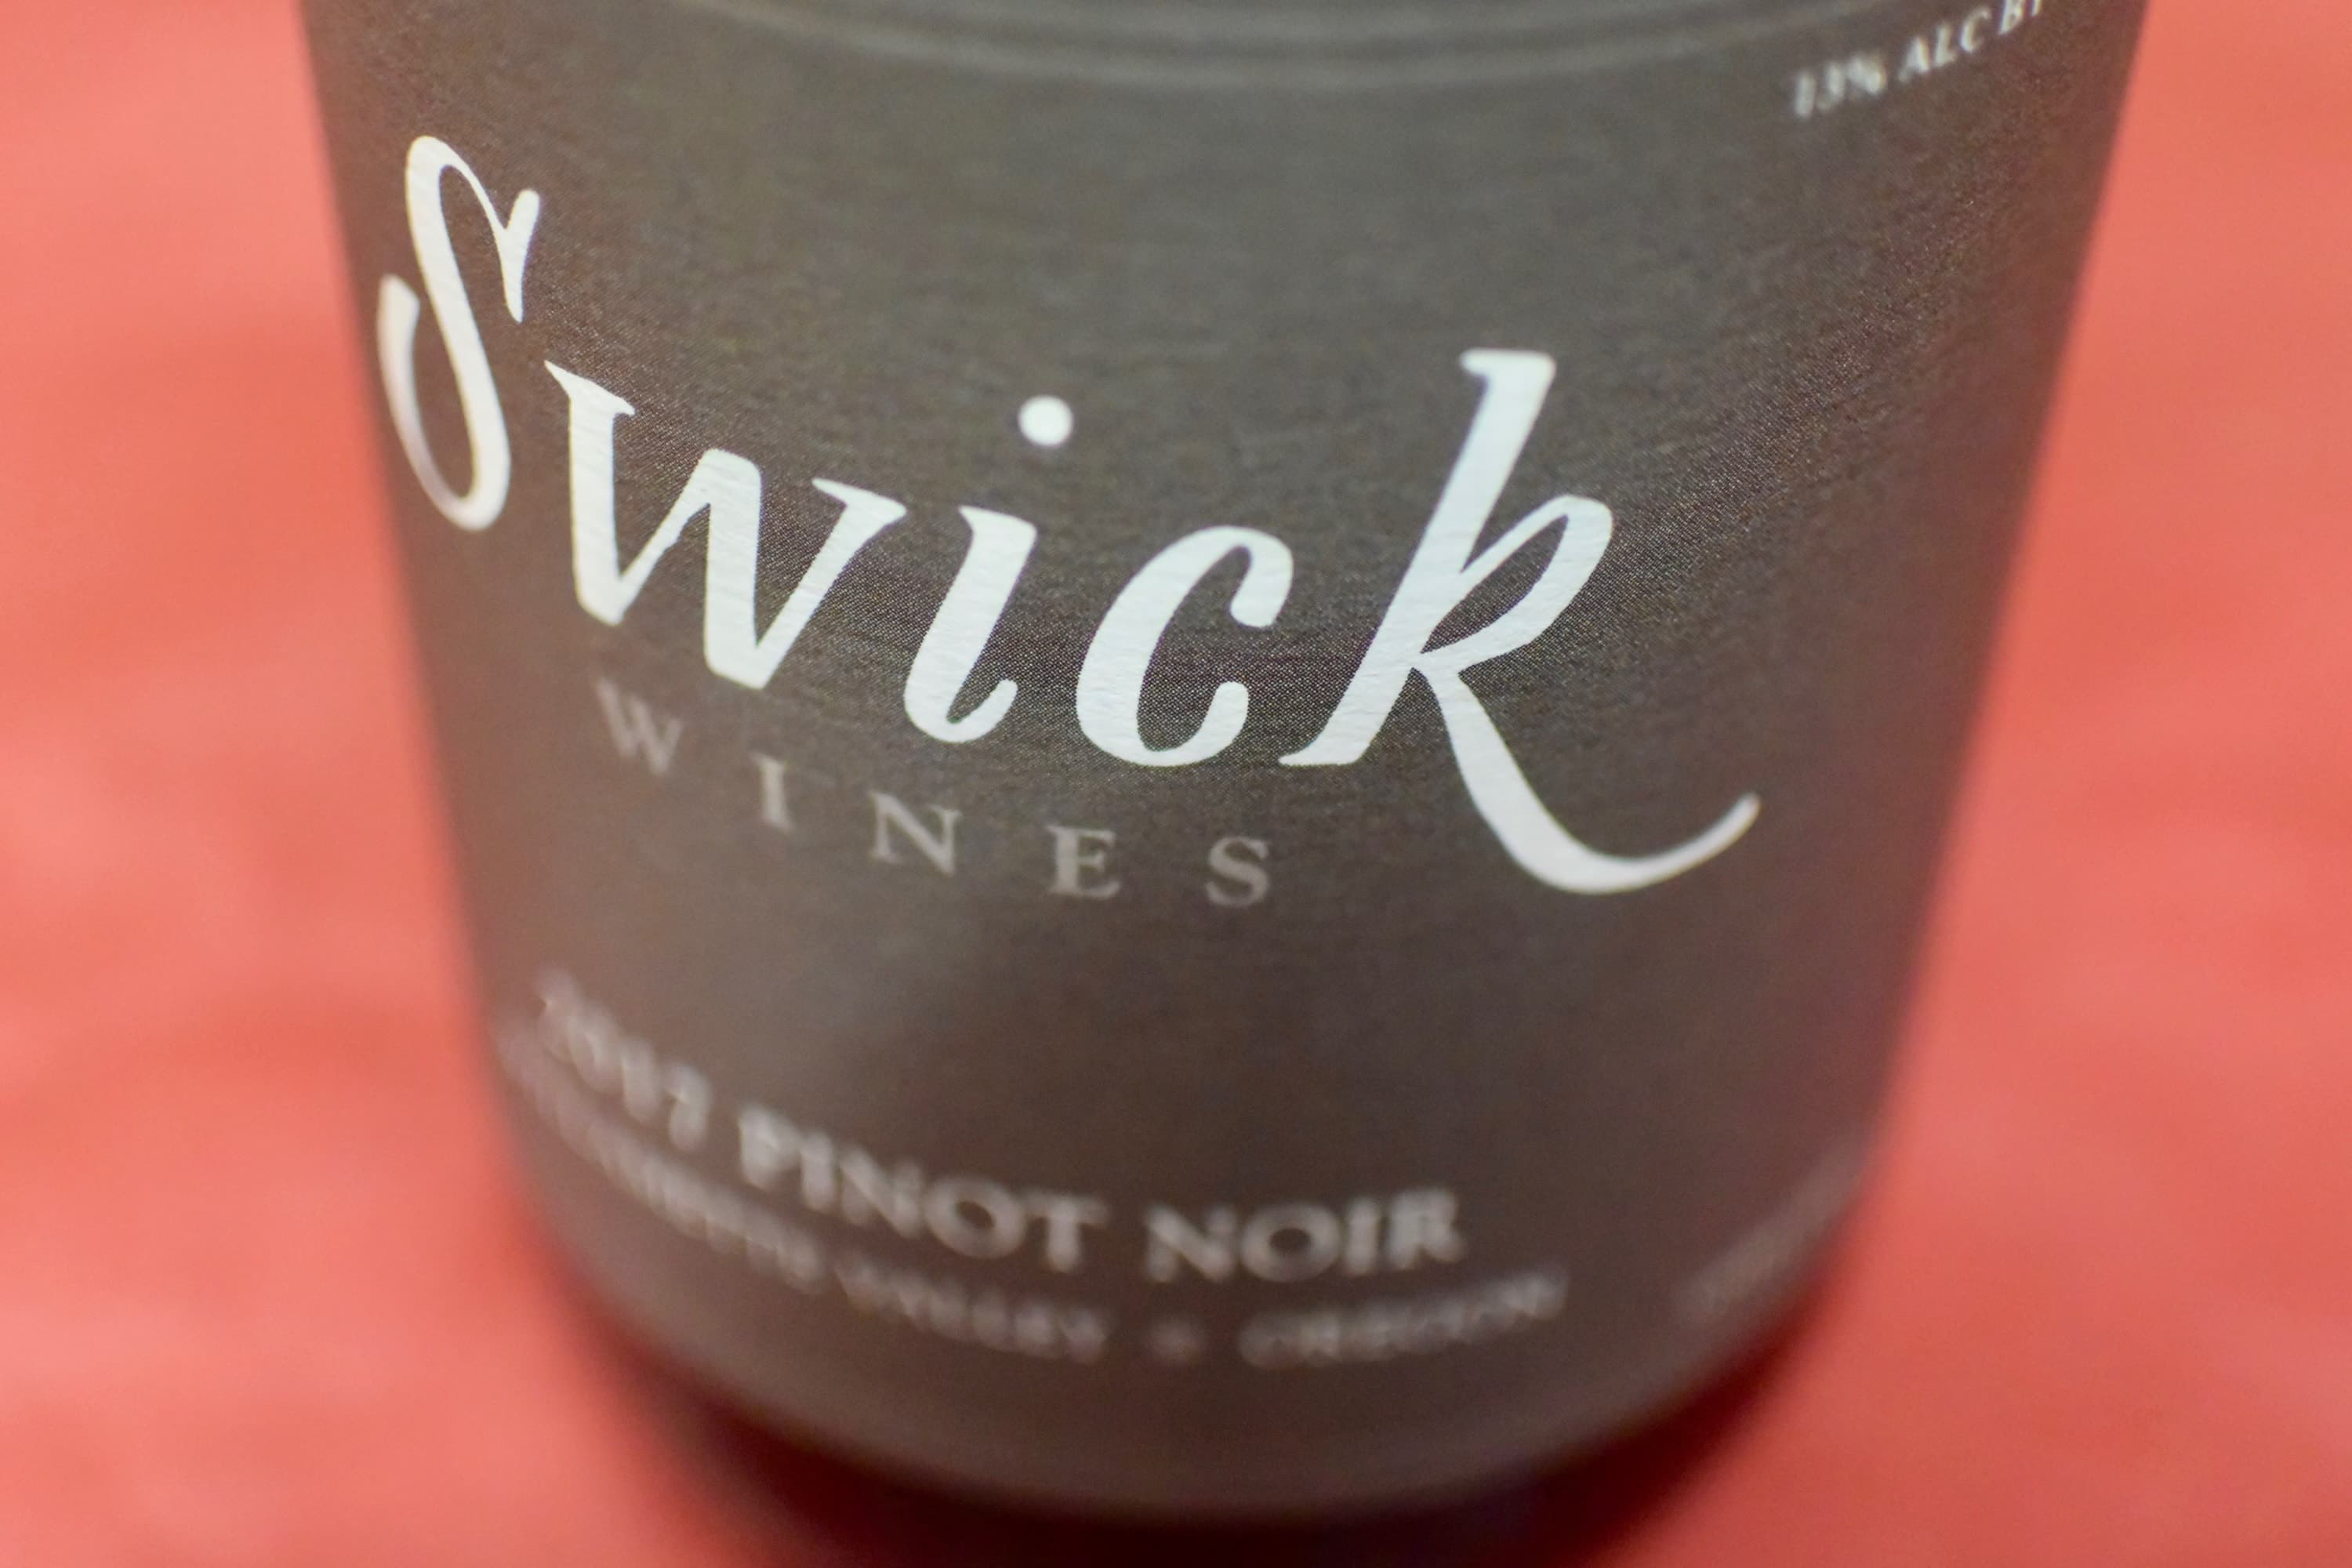  Swick Pinot Noir Willamette Valley 2017